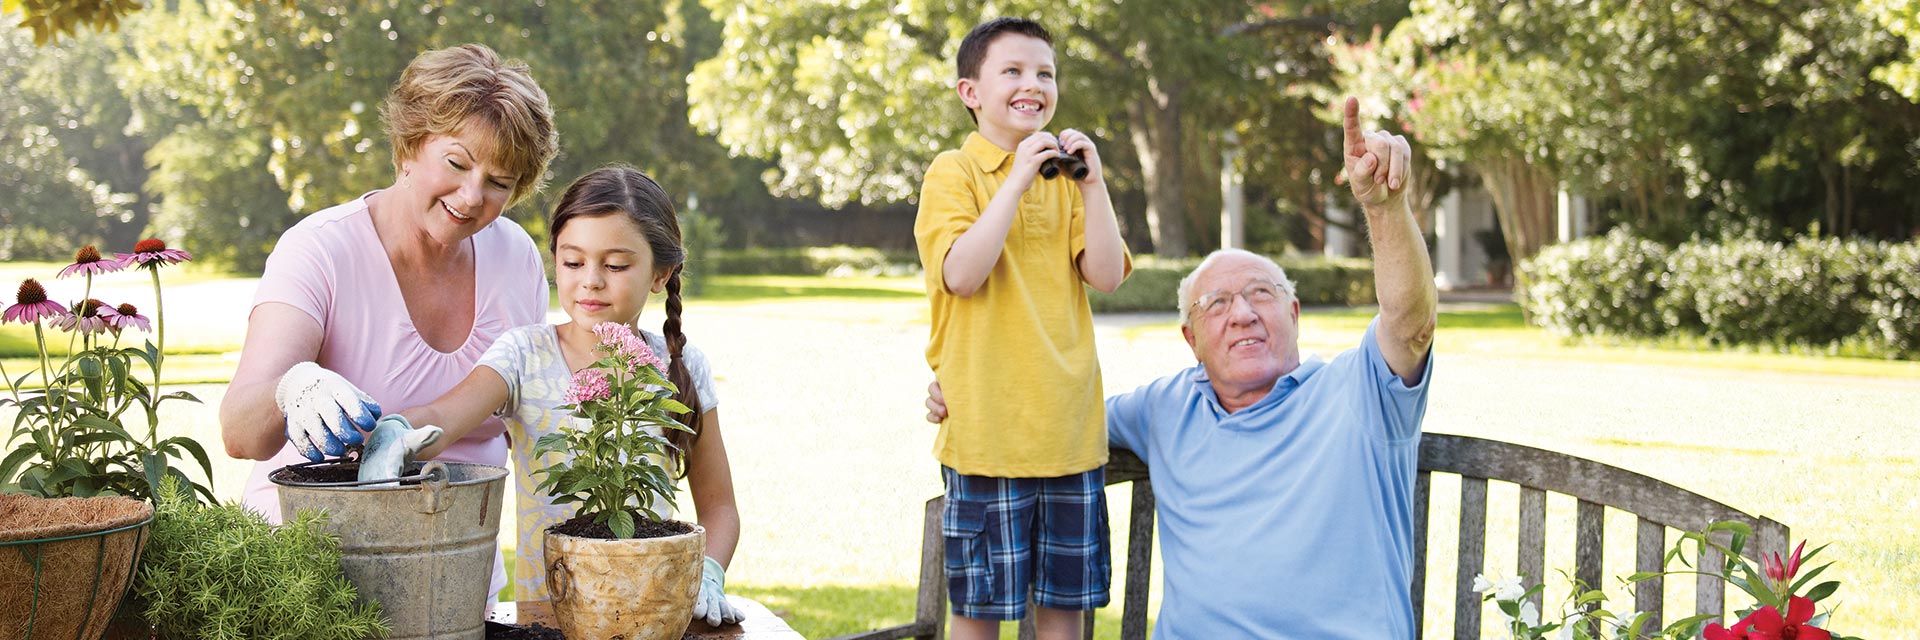 Grandparents gardening with grandchildren